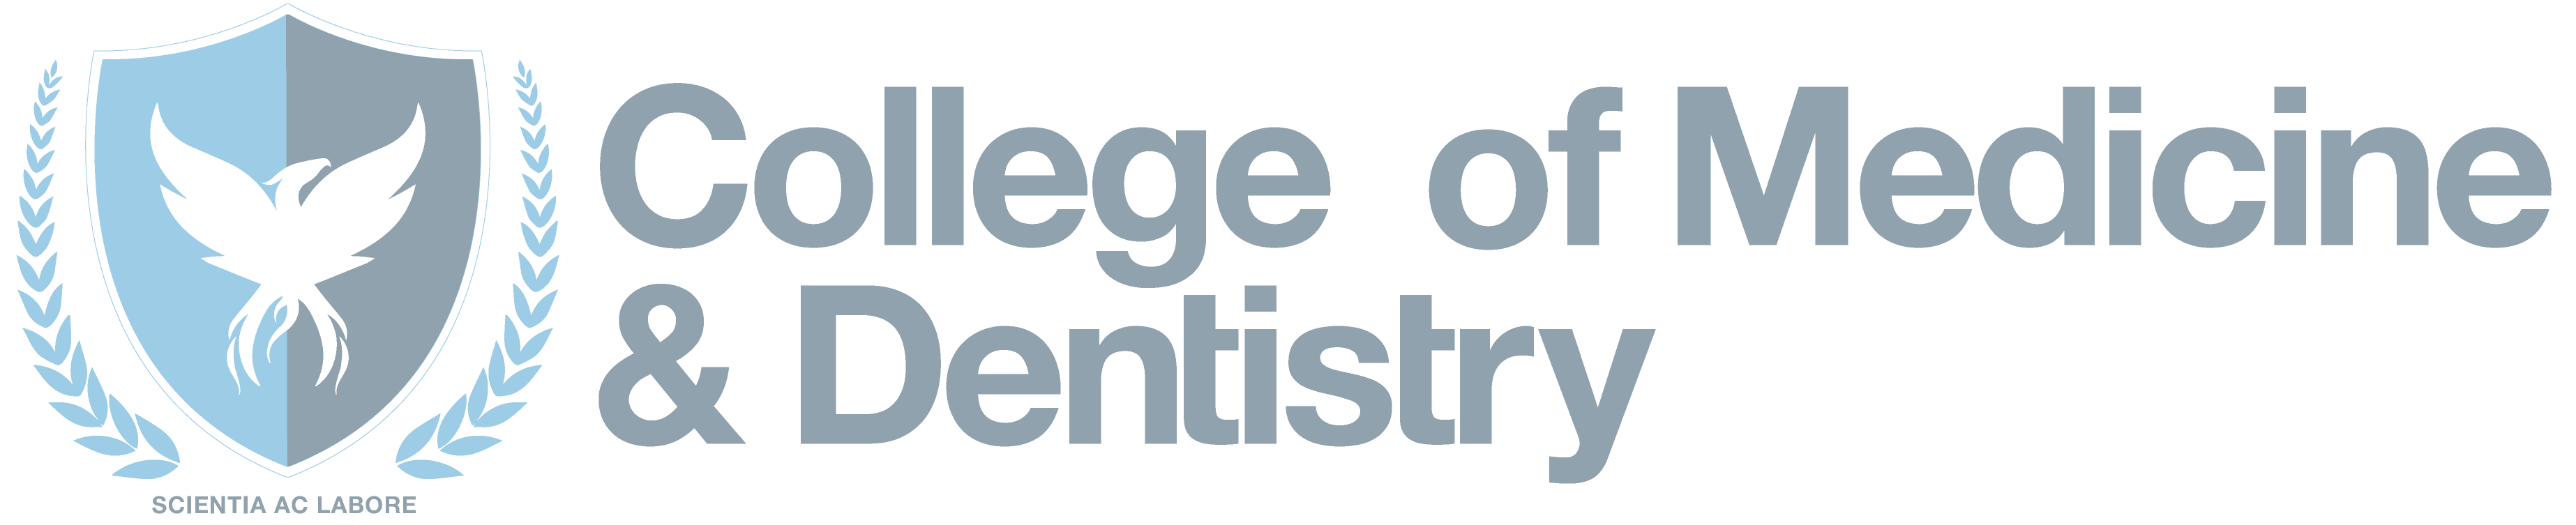 College of Medicine and Dentistry, Birmingham